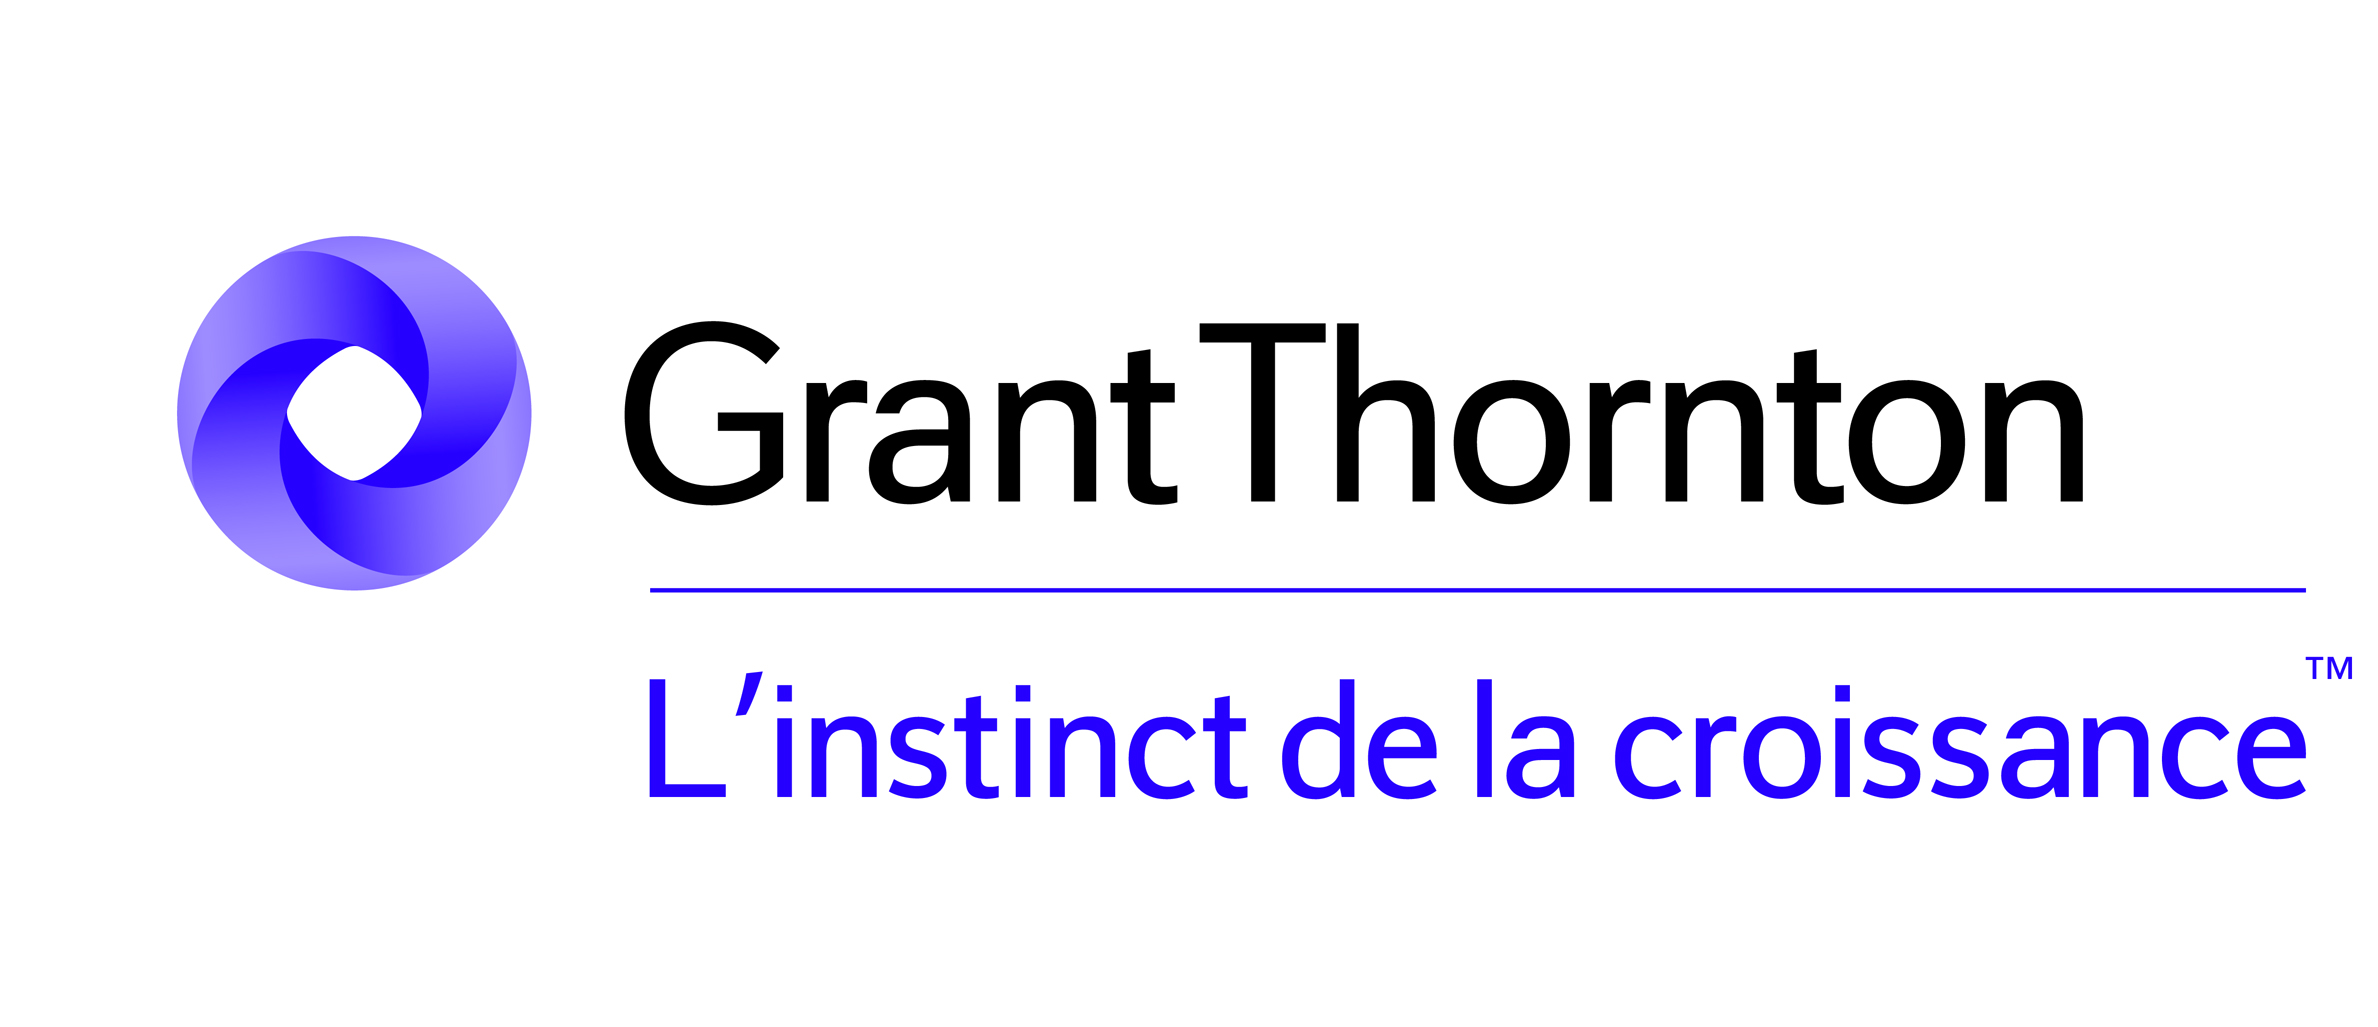 GRANT THORNTON France-medium-Primary.jpg 